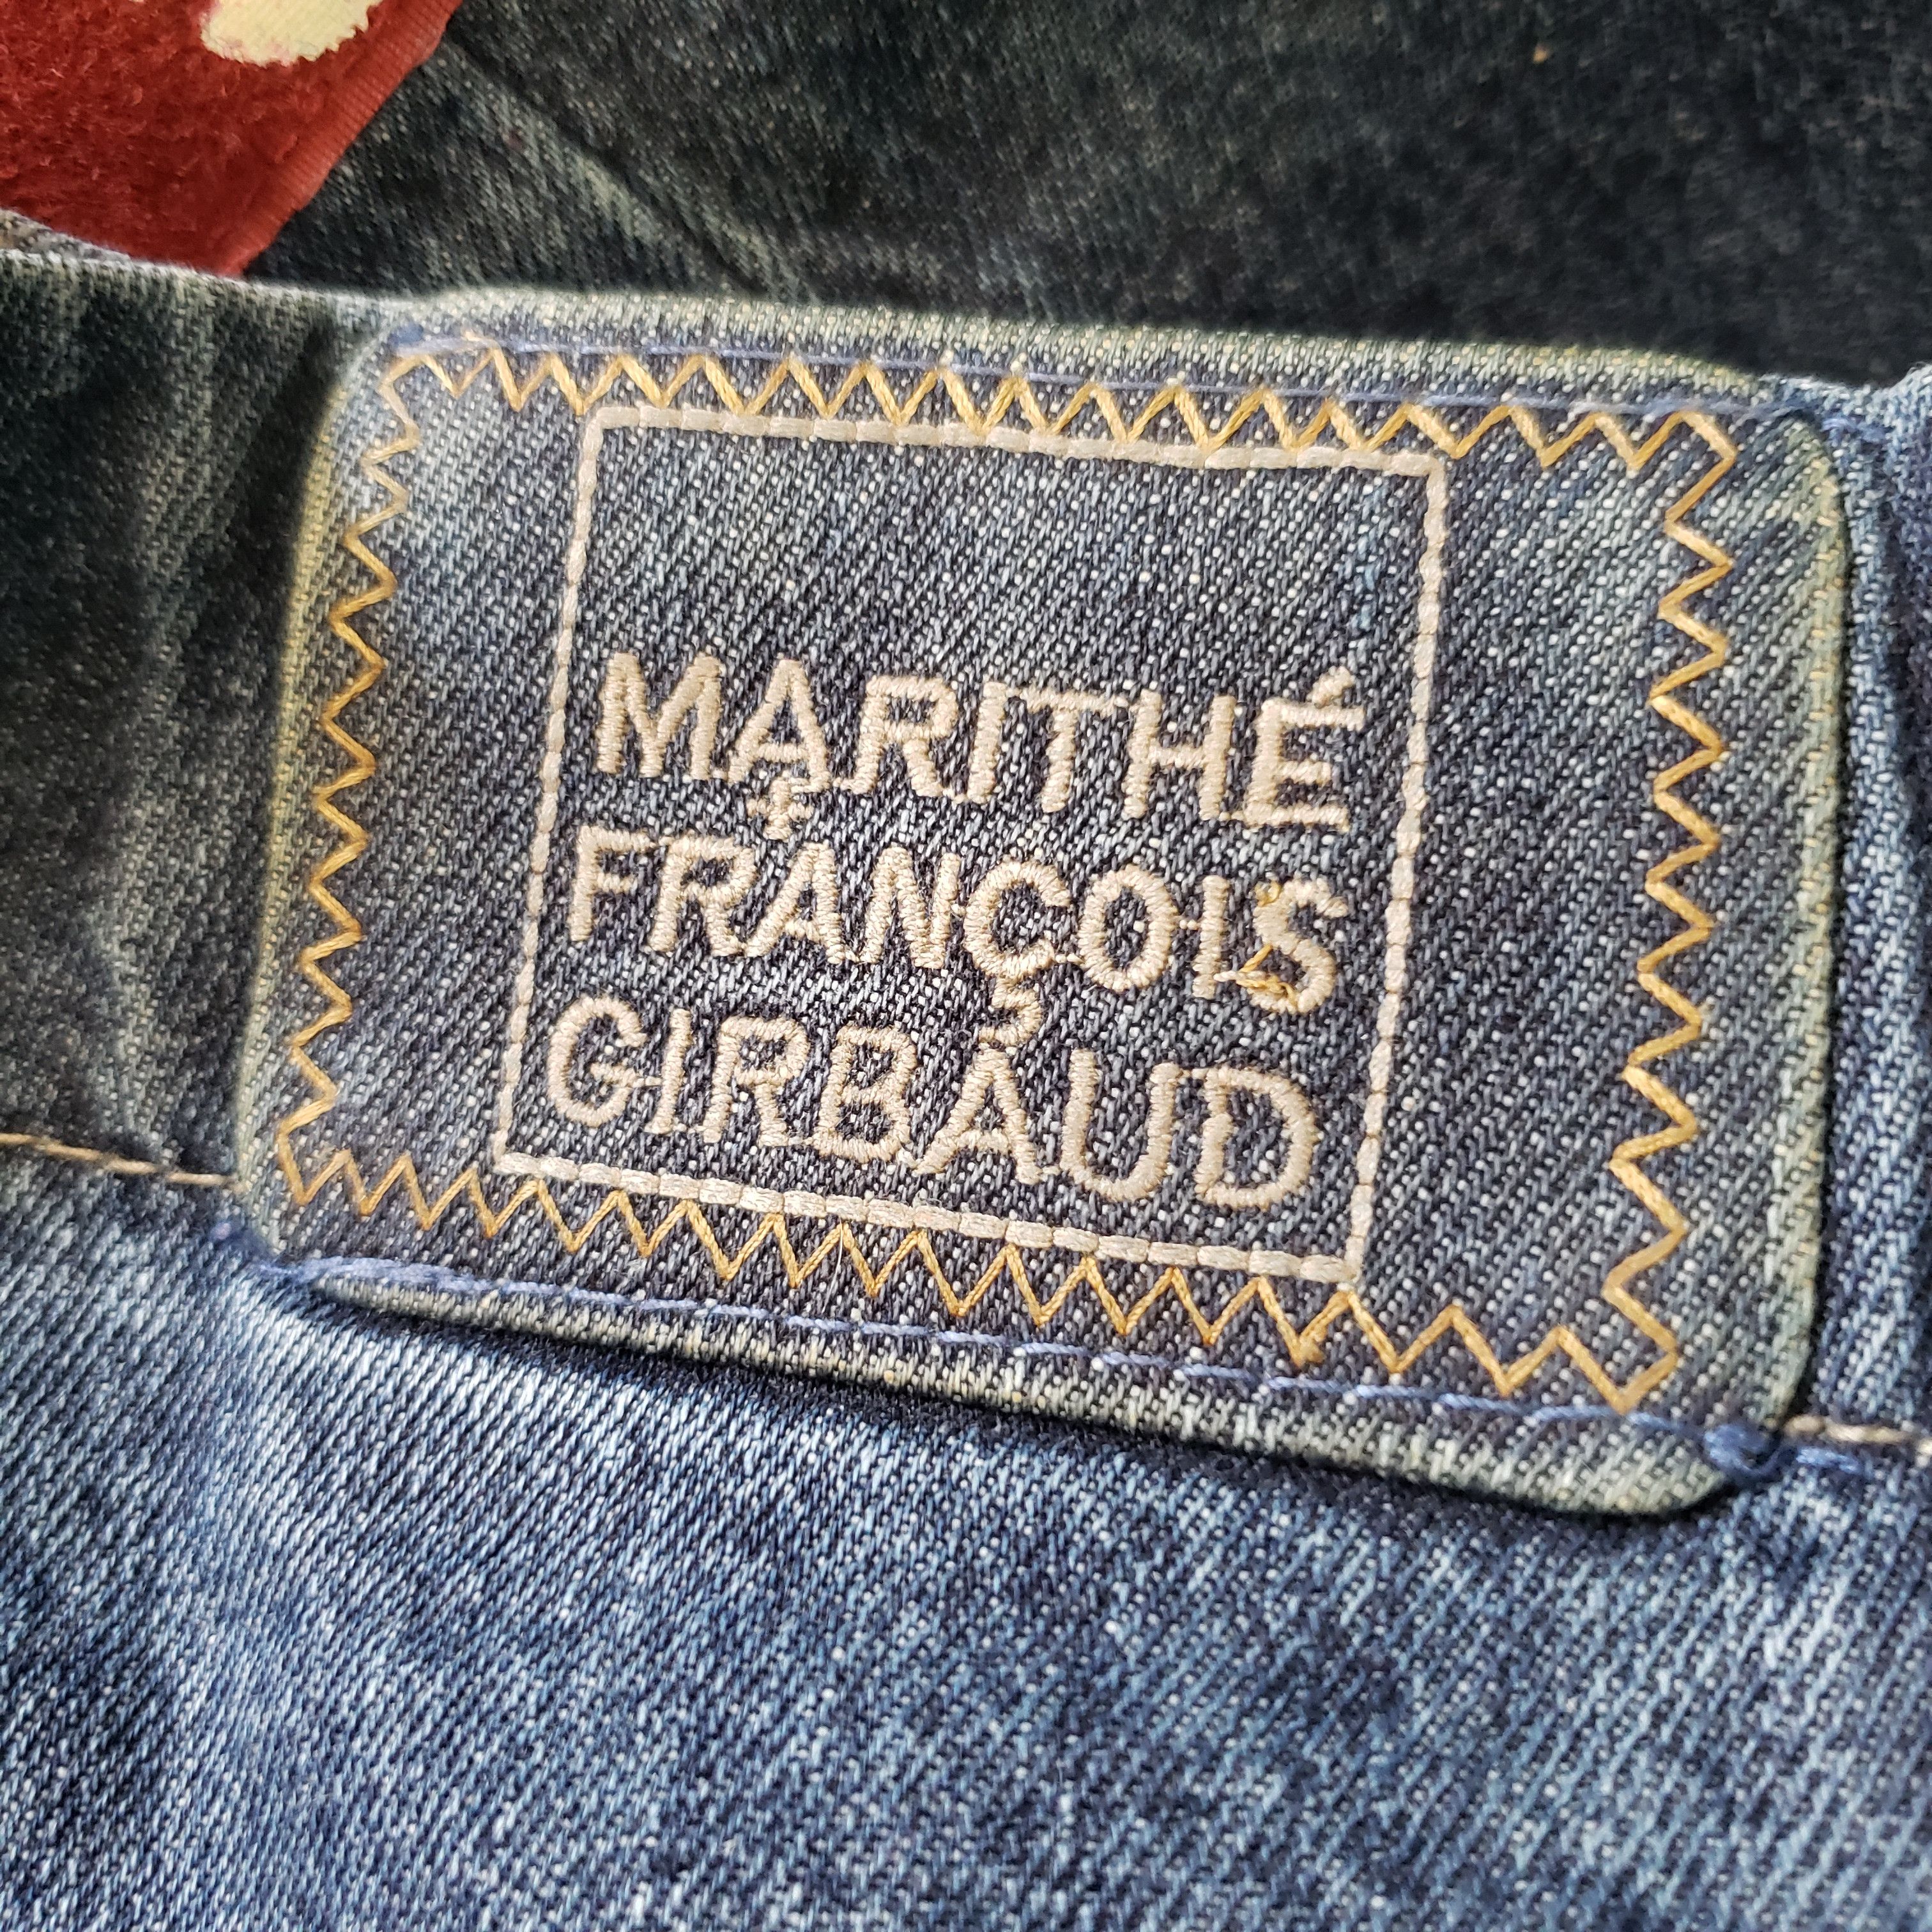 Marithe Francois Girbaud VINTAGE MARITHE FRANCOIS GIRBAUD JEANS Size US 36 / EU 52 - 9 Thumbnail